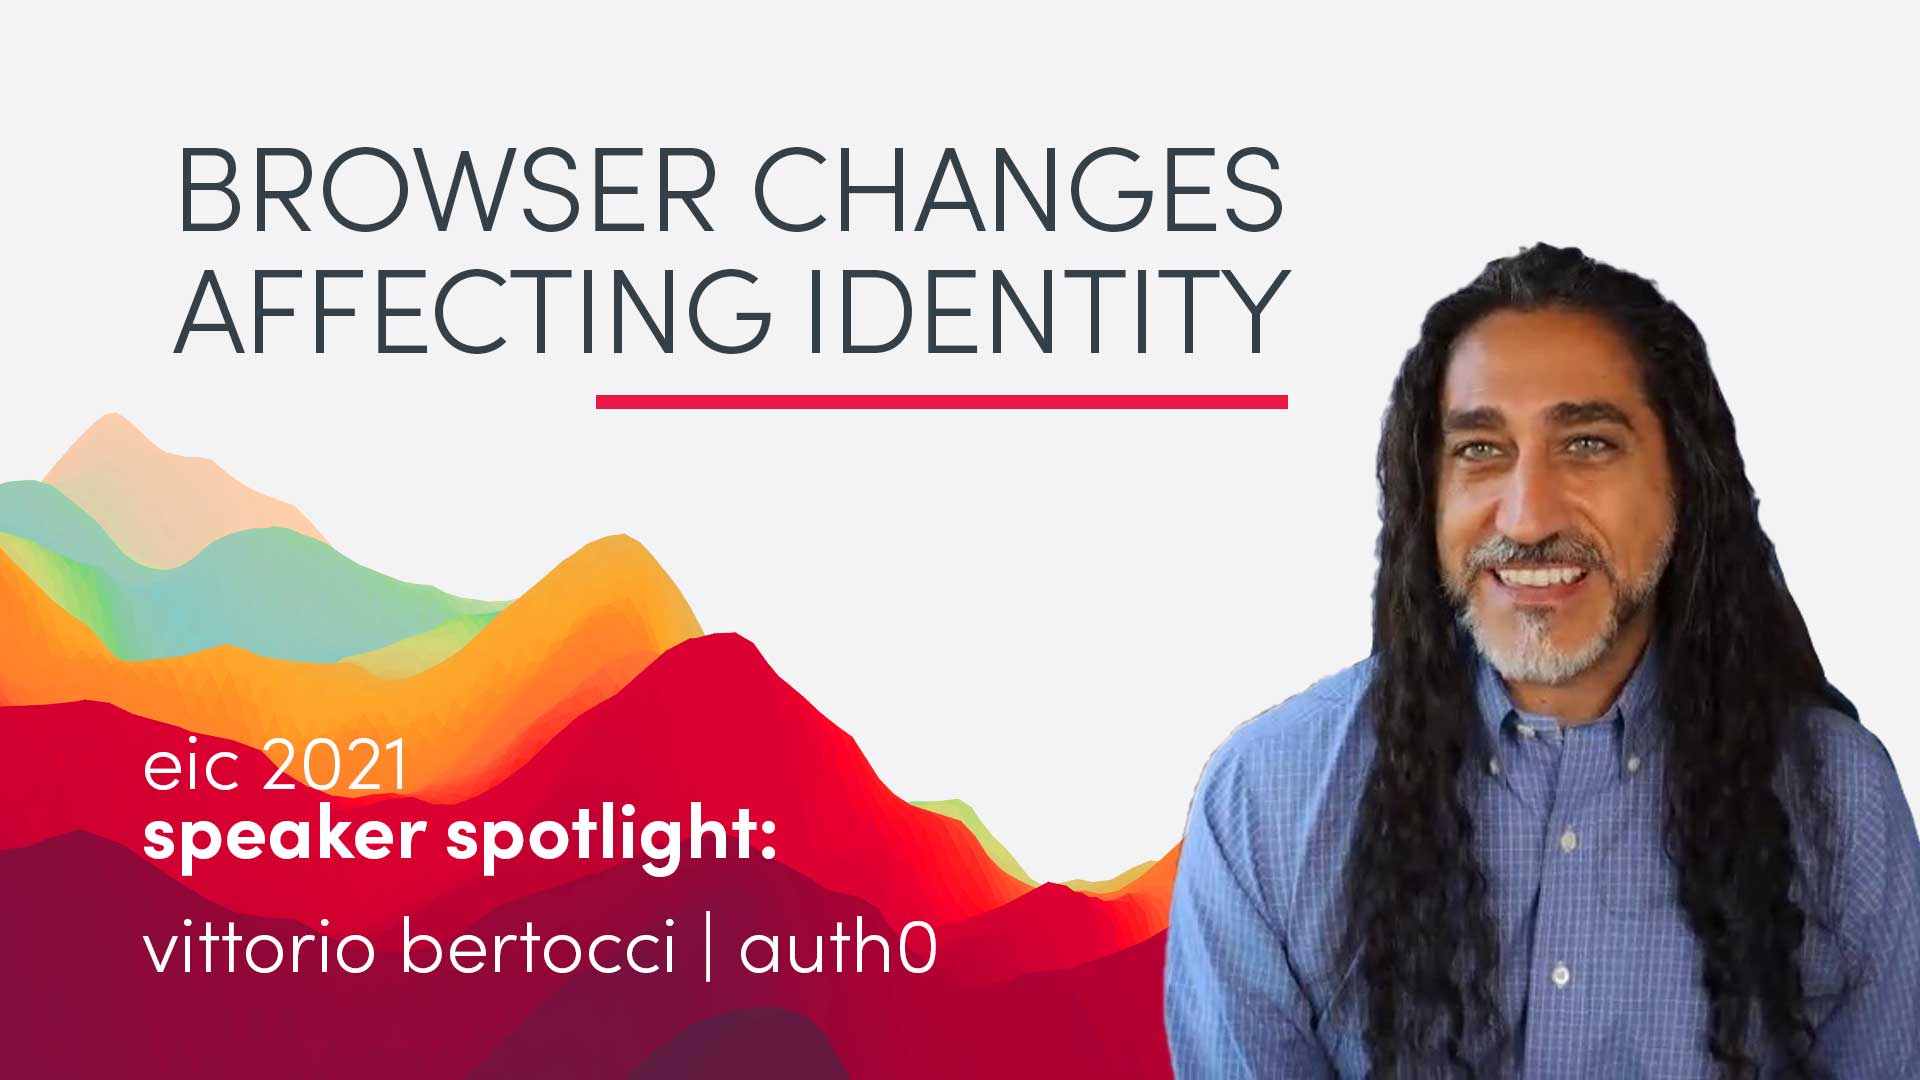 EIC Speaker Spotlight: Vittorio Bertocci on Browser Changes Affecting Identity